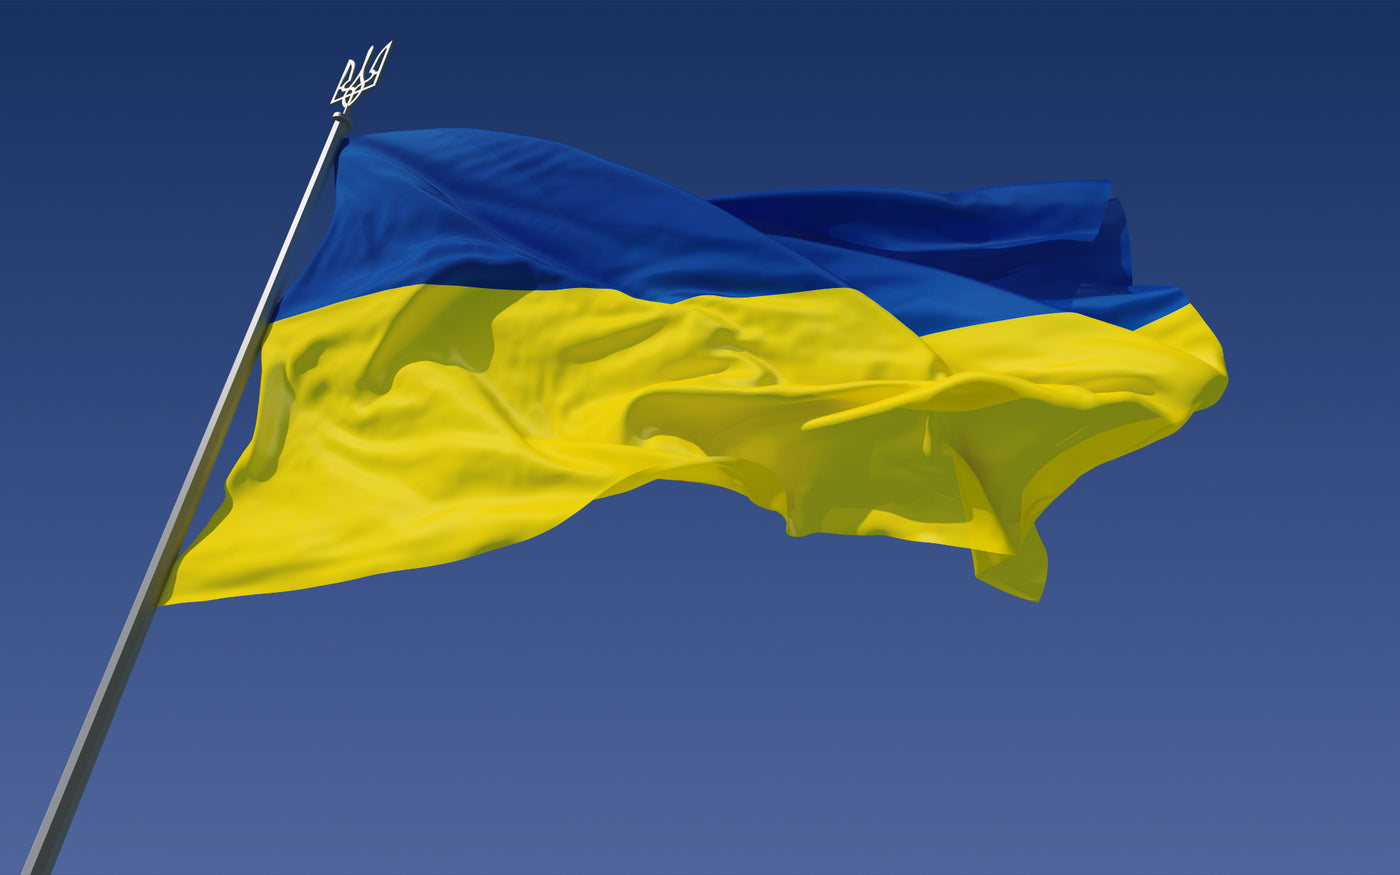 UKRAINE STANDING UP FOR DEMOCRACY